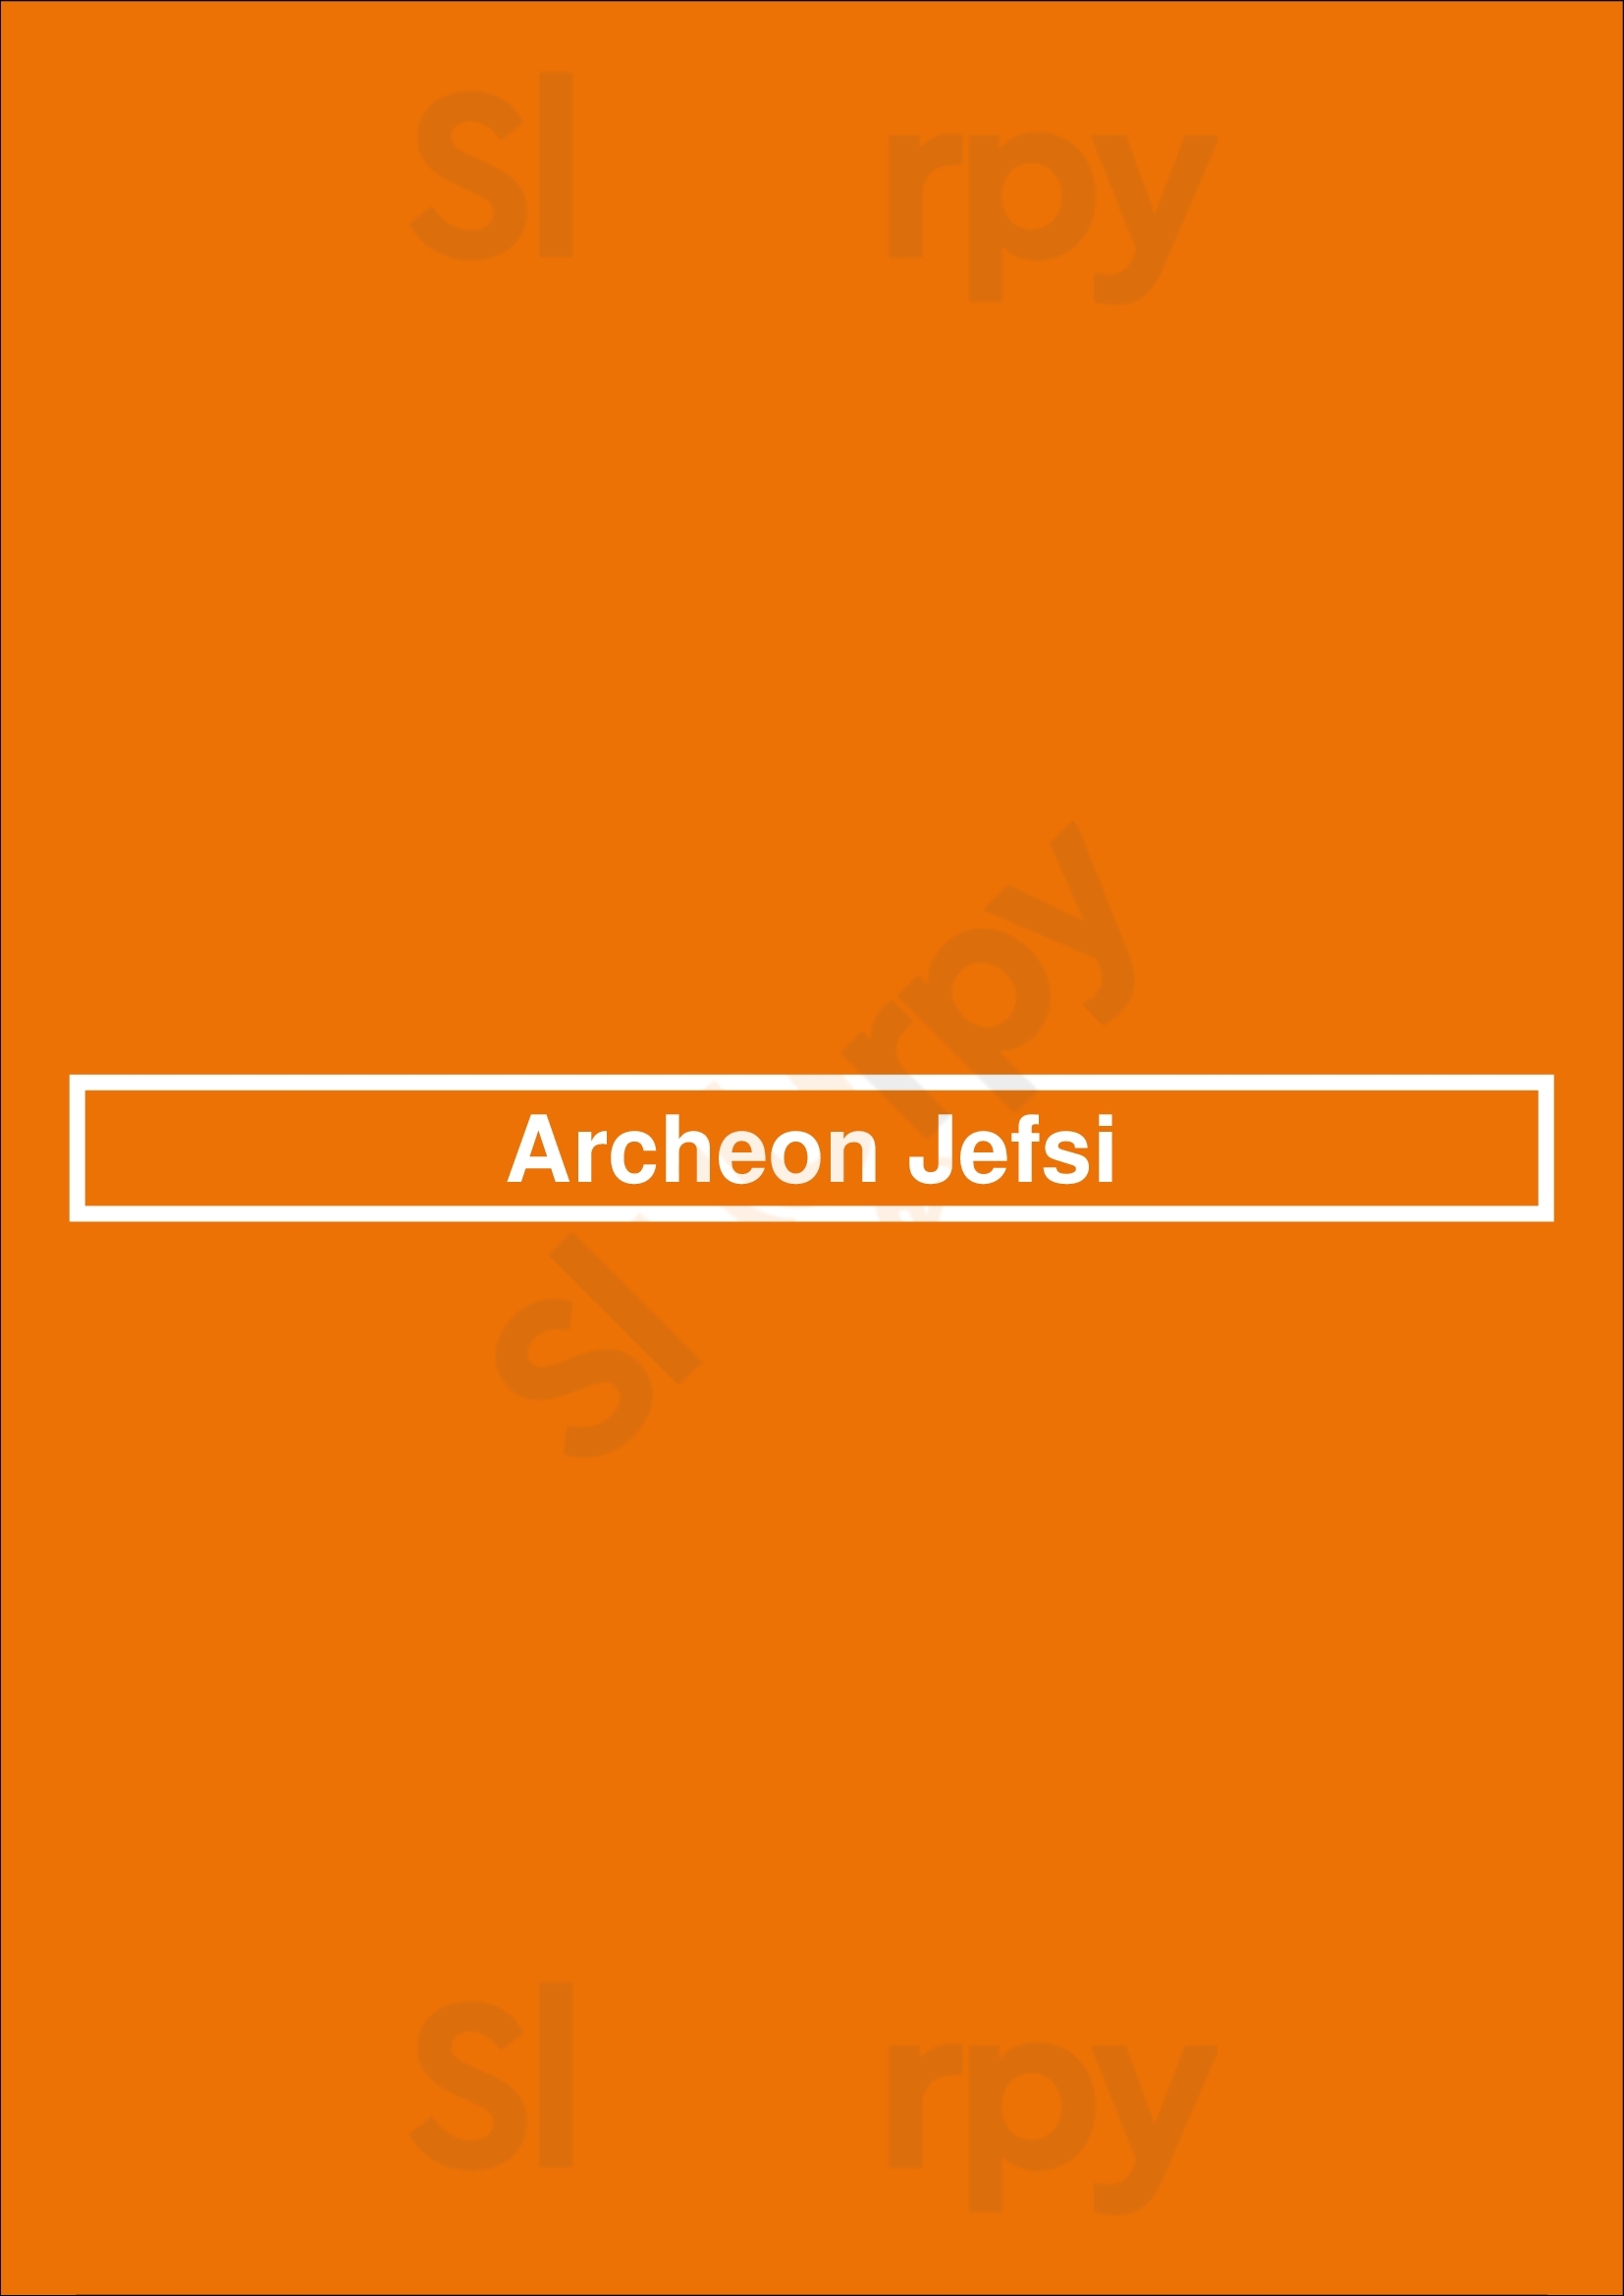 Archeon Jefsi Maarssen Menu - 1